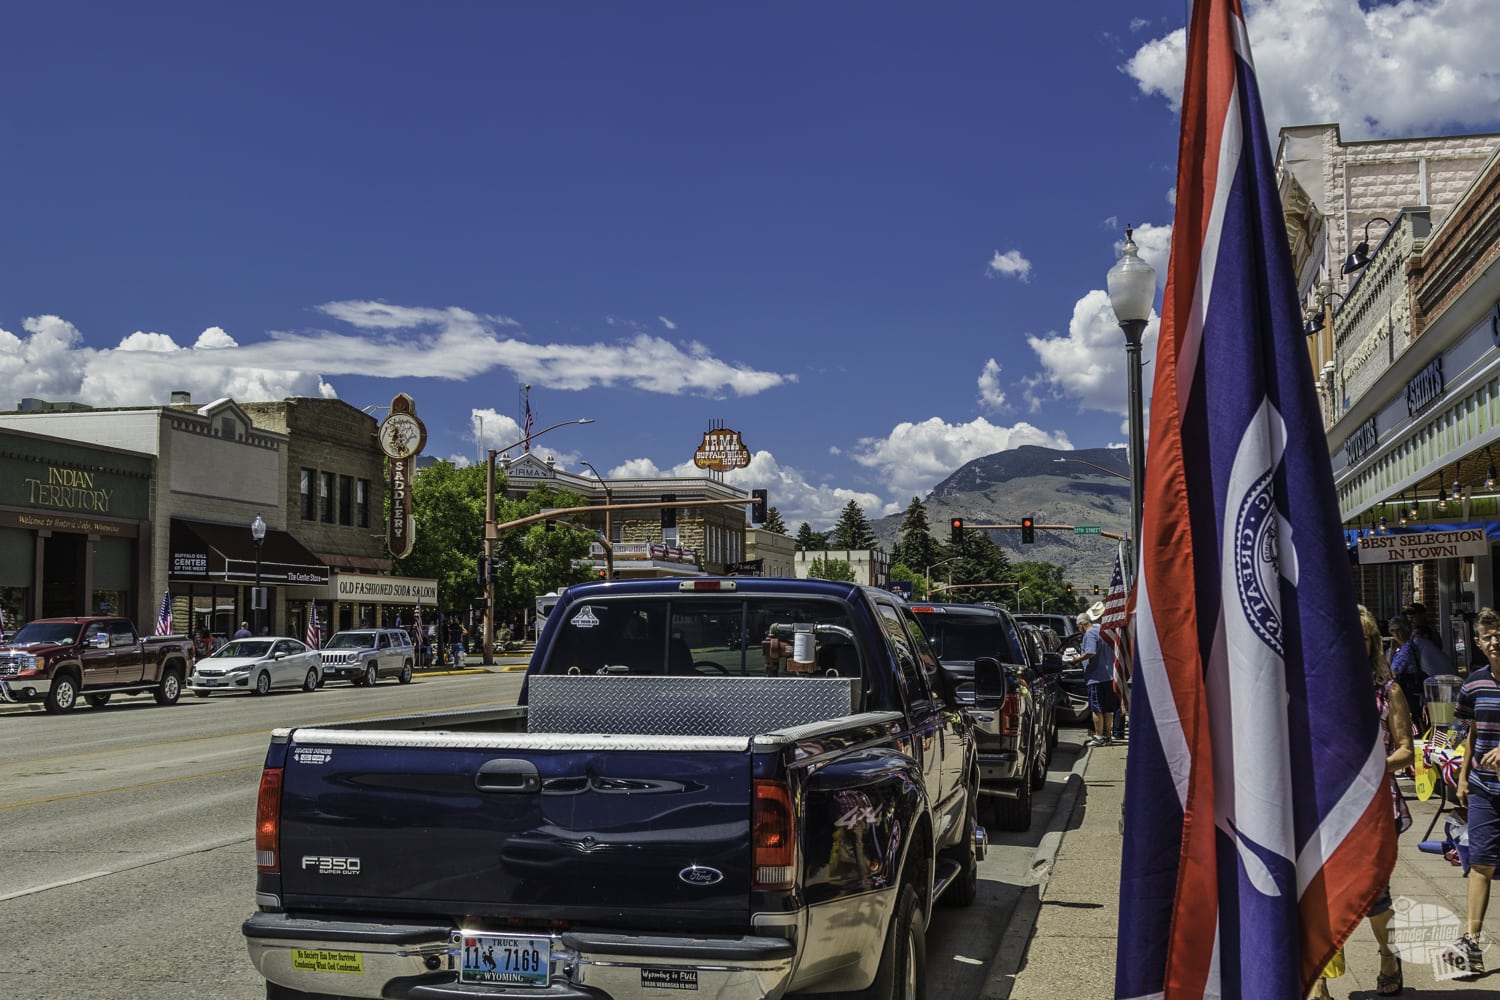 Downtown Cody Wyoming